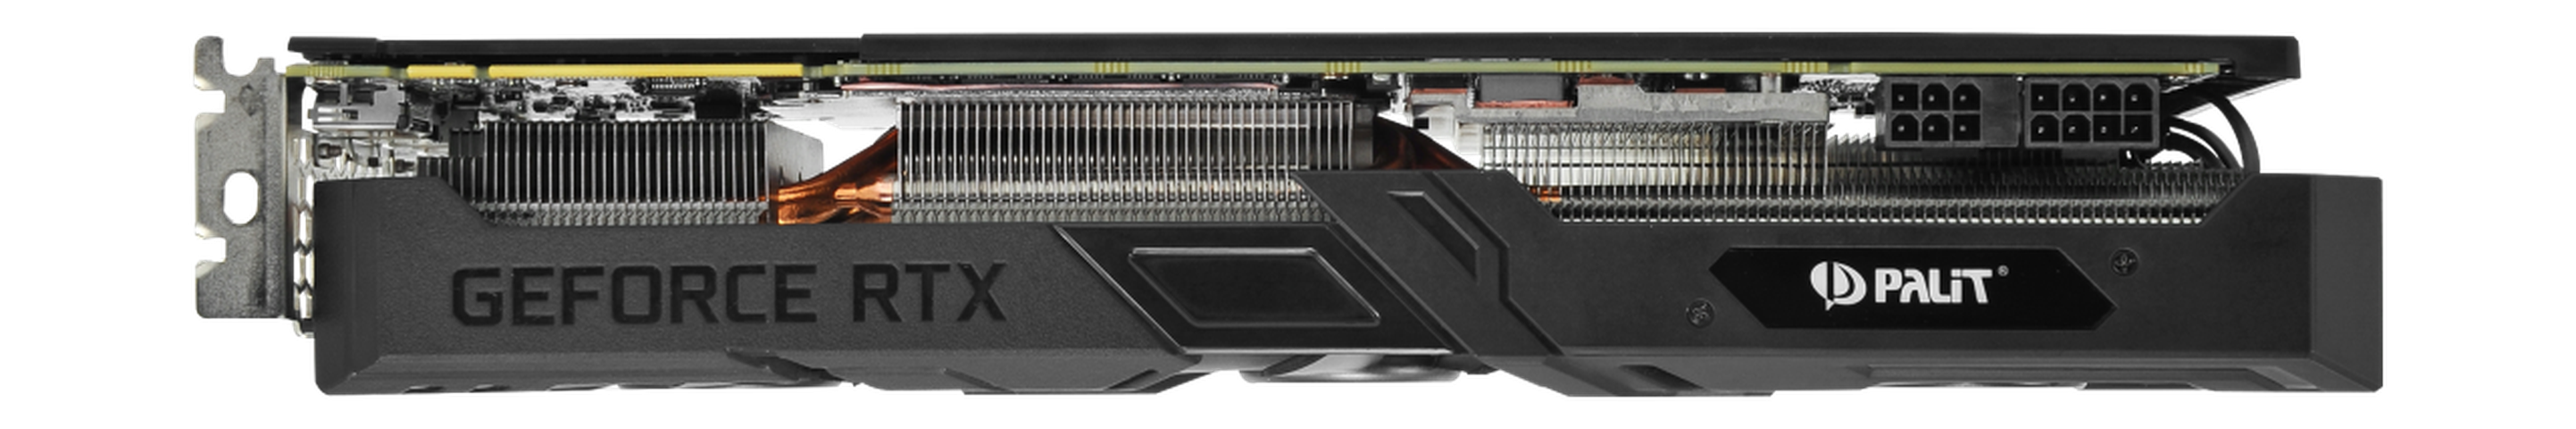 Palit 2070 super. Видеокарта Palit GEFORCE RTX 2080 super 1650mhz PCI-E 3.0 8192mb 15500mhz 256 bit HDMI HDCP GAMEROCK. Palit 2080 super. Видеокарта Palit GEFORCE RTX 2080 super 1650mhz PCI-E 3.0 8192mb 15500mhz 256 bit HDMI 3xdisplayport HDCP White GAMEROCK.